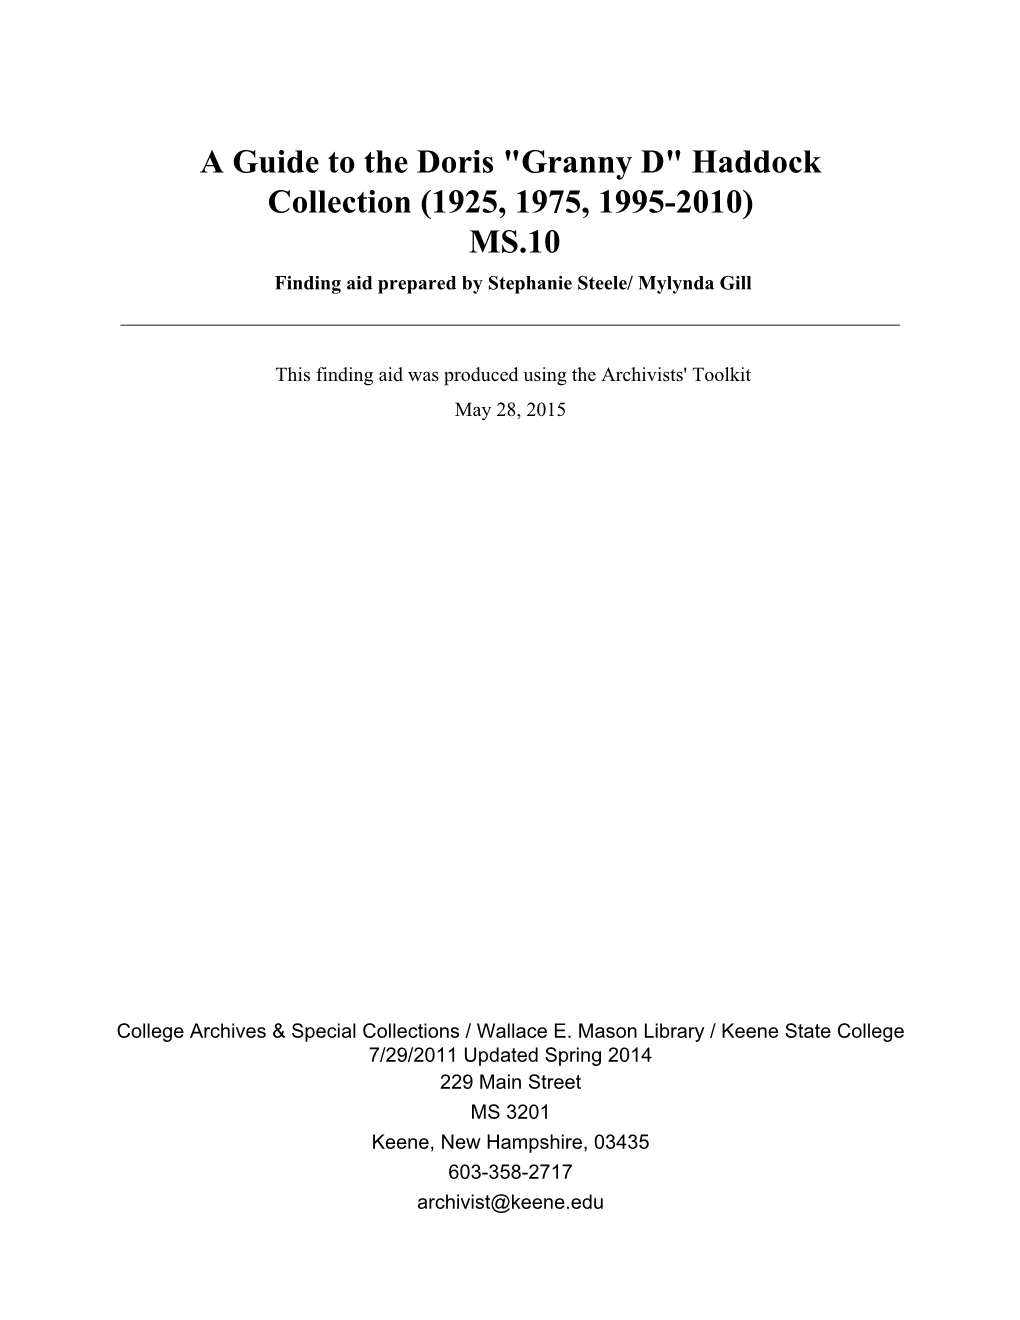 Granny D" Haddock Collection (1925, 1975, 1995-2010) MS.10 Finding Aid Prepared by Stephanie Steele/ Mylynda Gill